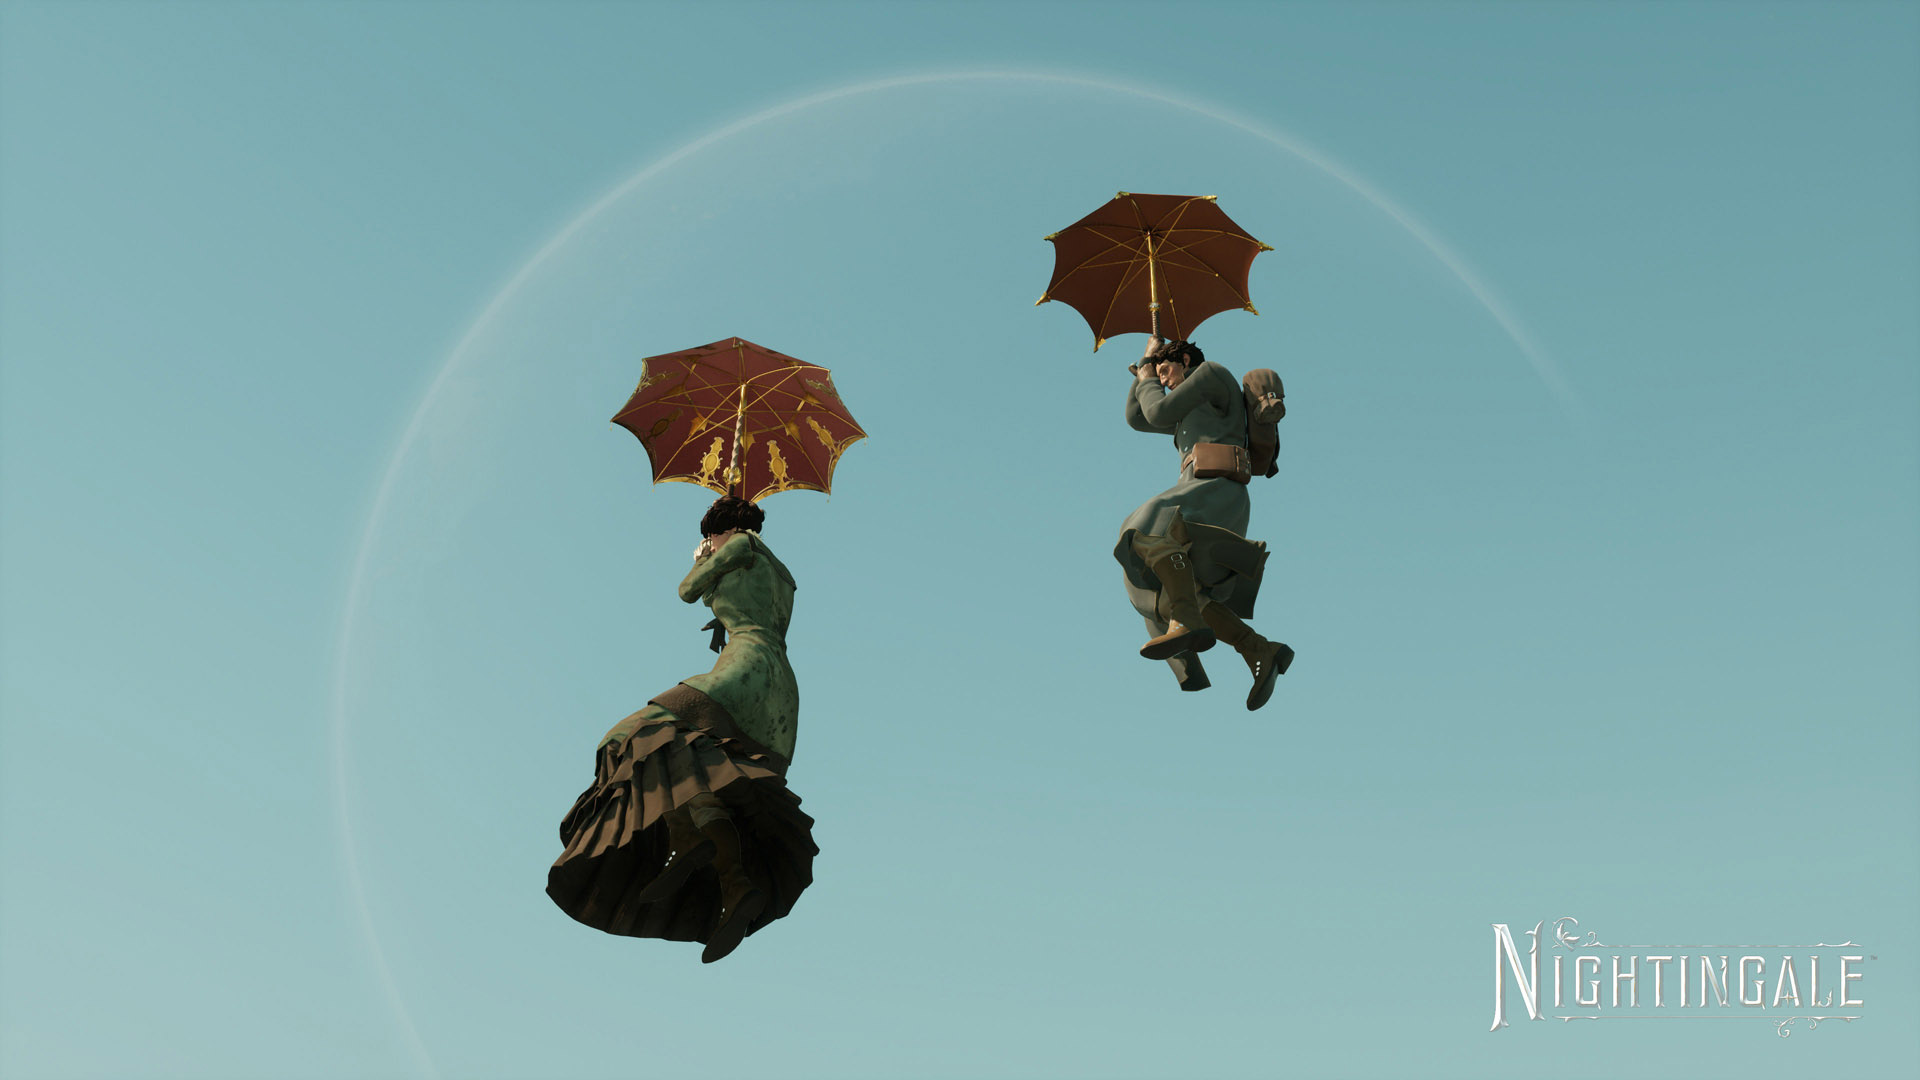 Nightingale Umbrellas for Gliding